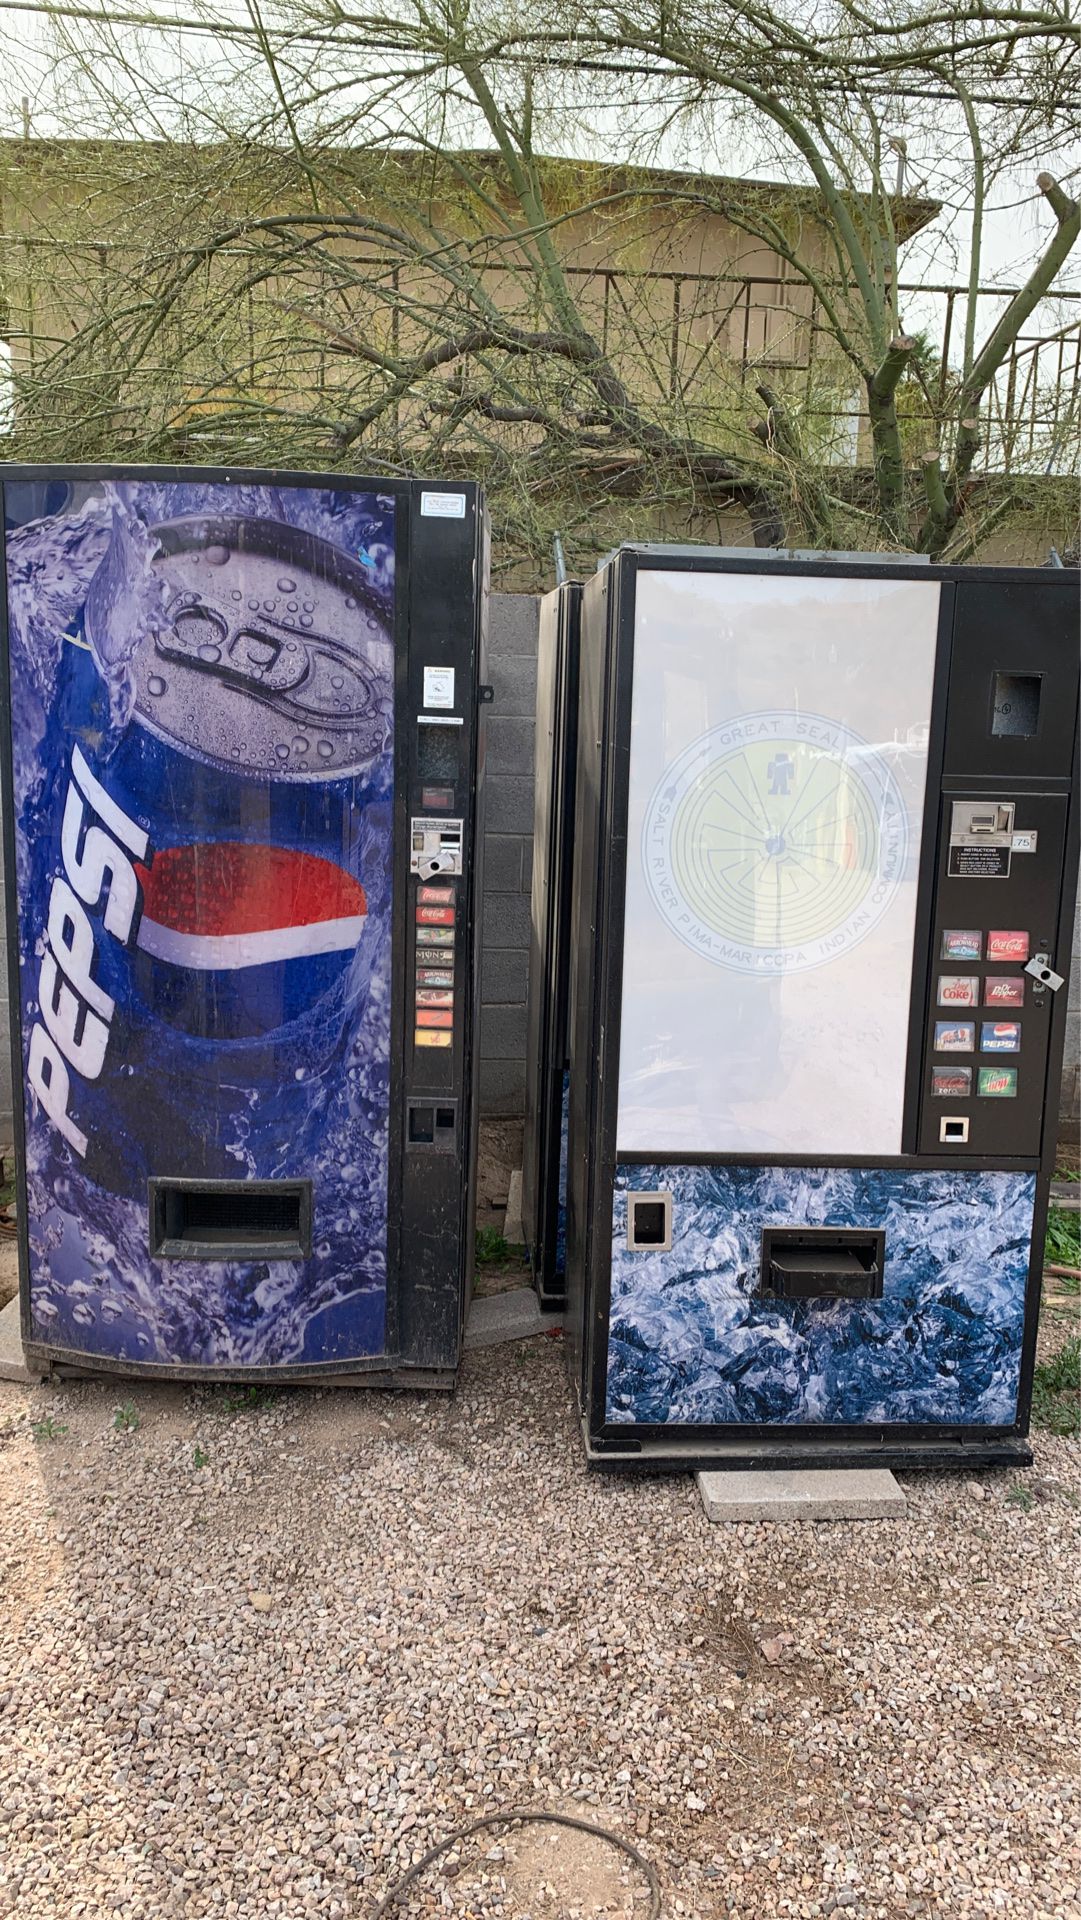 Nonworking vending machines for scrap